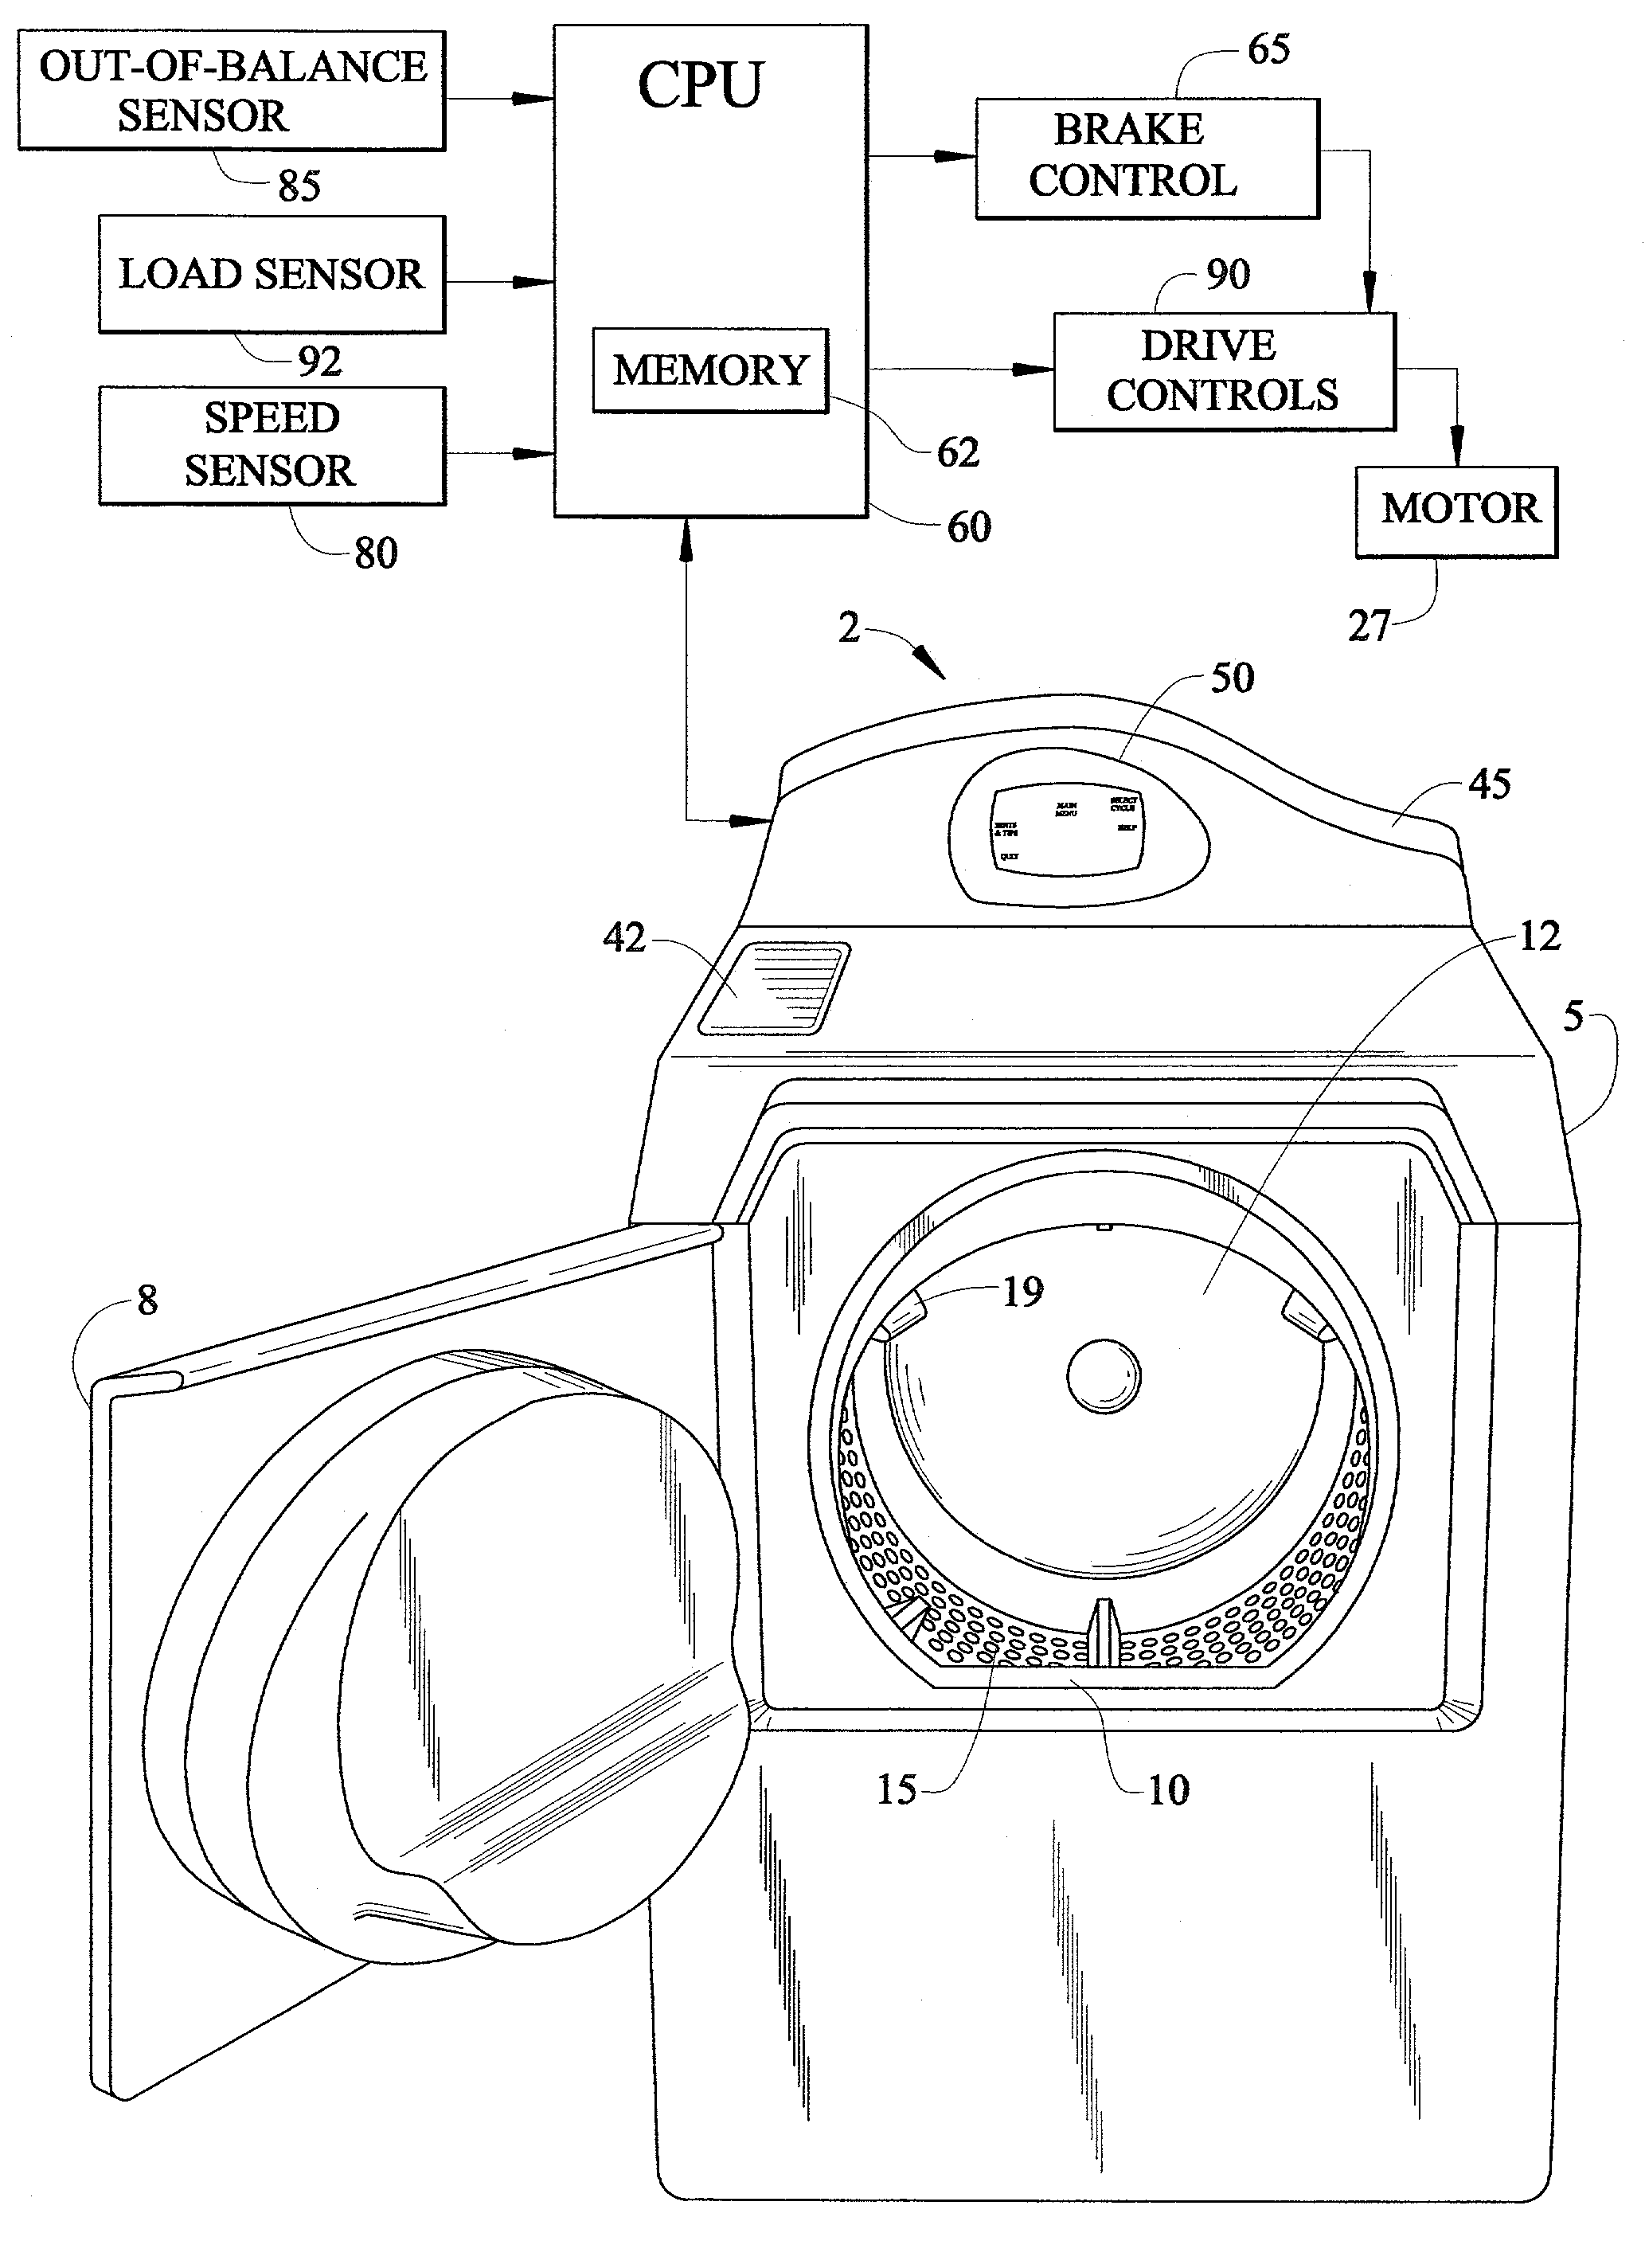 Braking control system for a washing machine